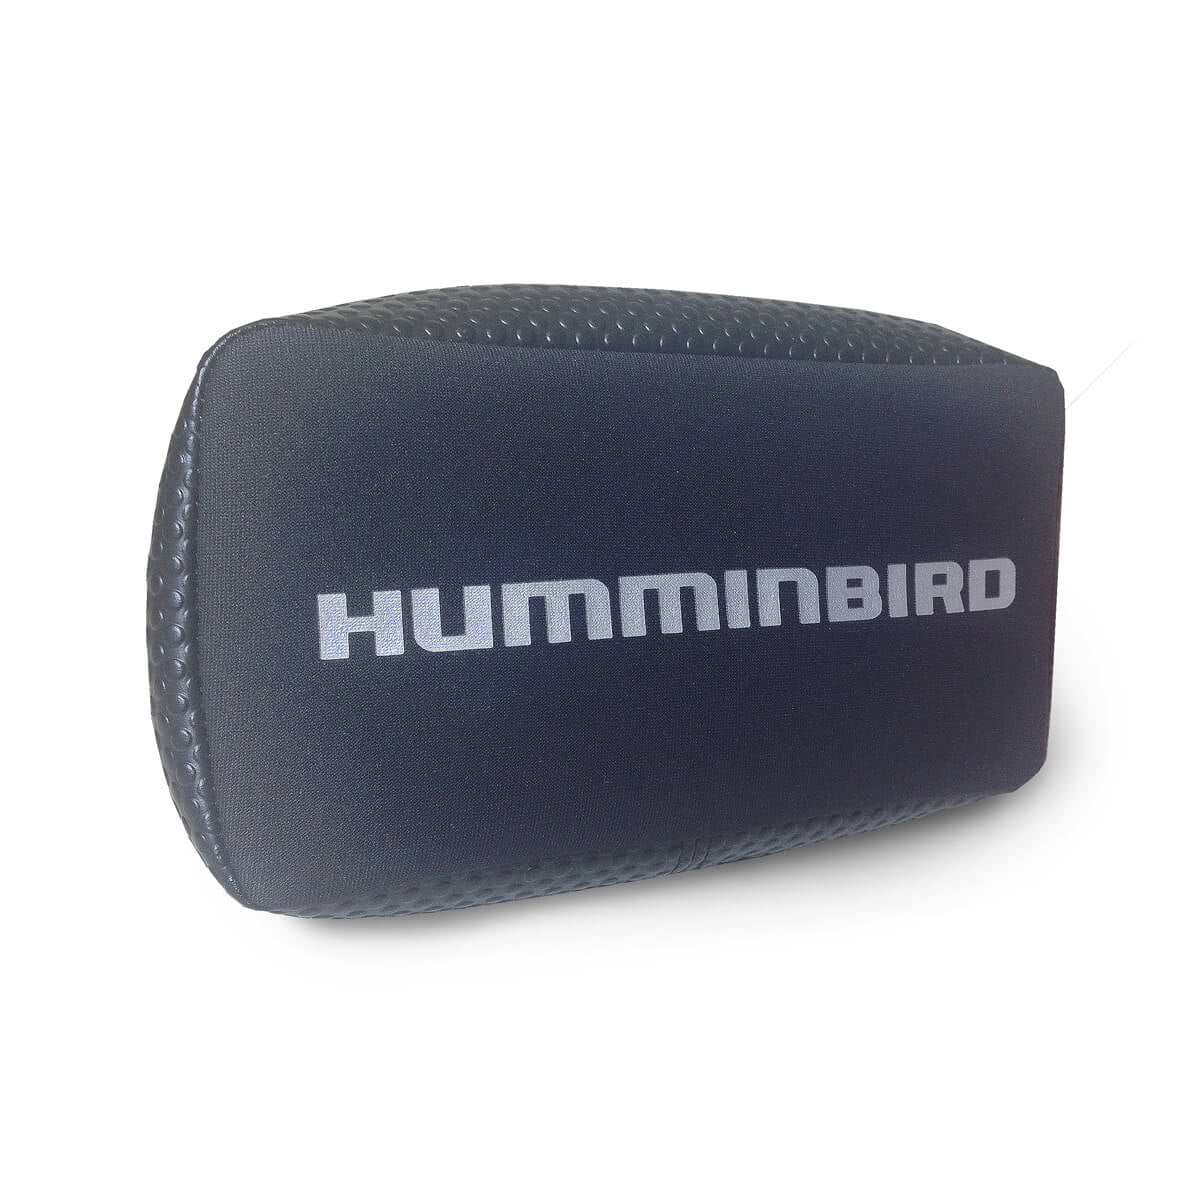 Gimbal Mount for HELIX-5 Series Units for sale online Minn Kota Humminbird 740143-1 GM H5 1 